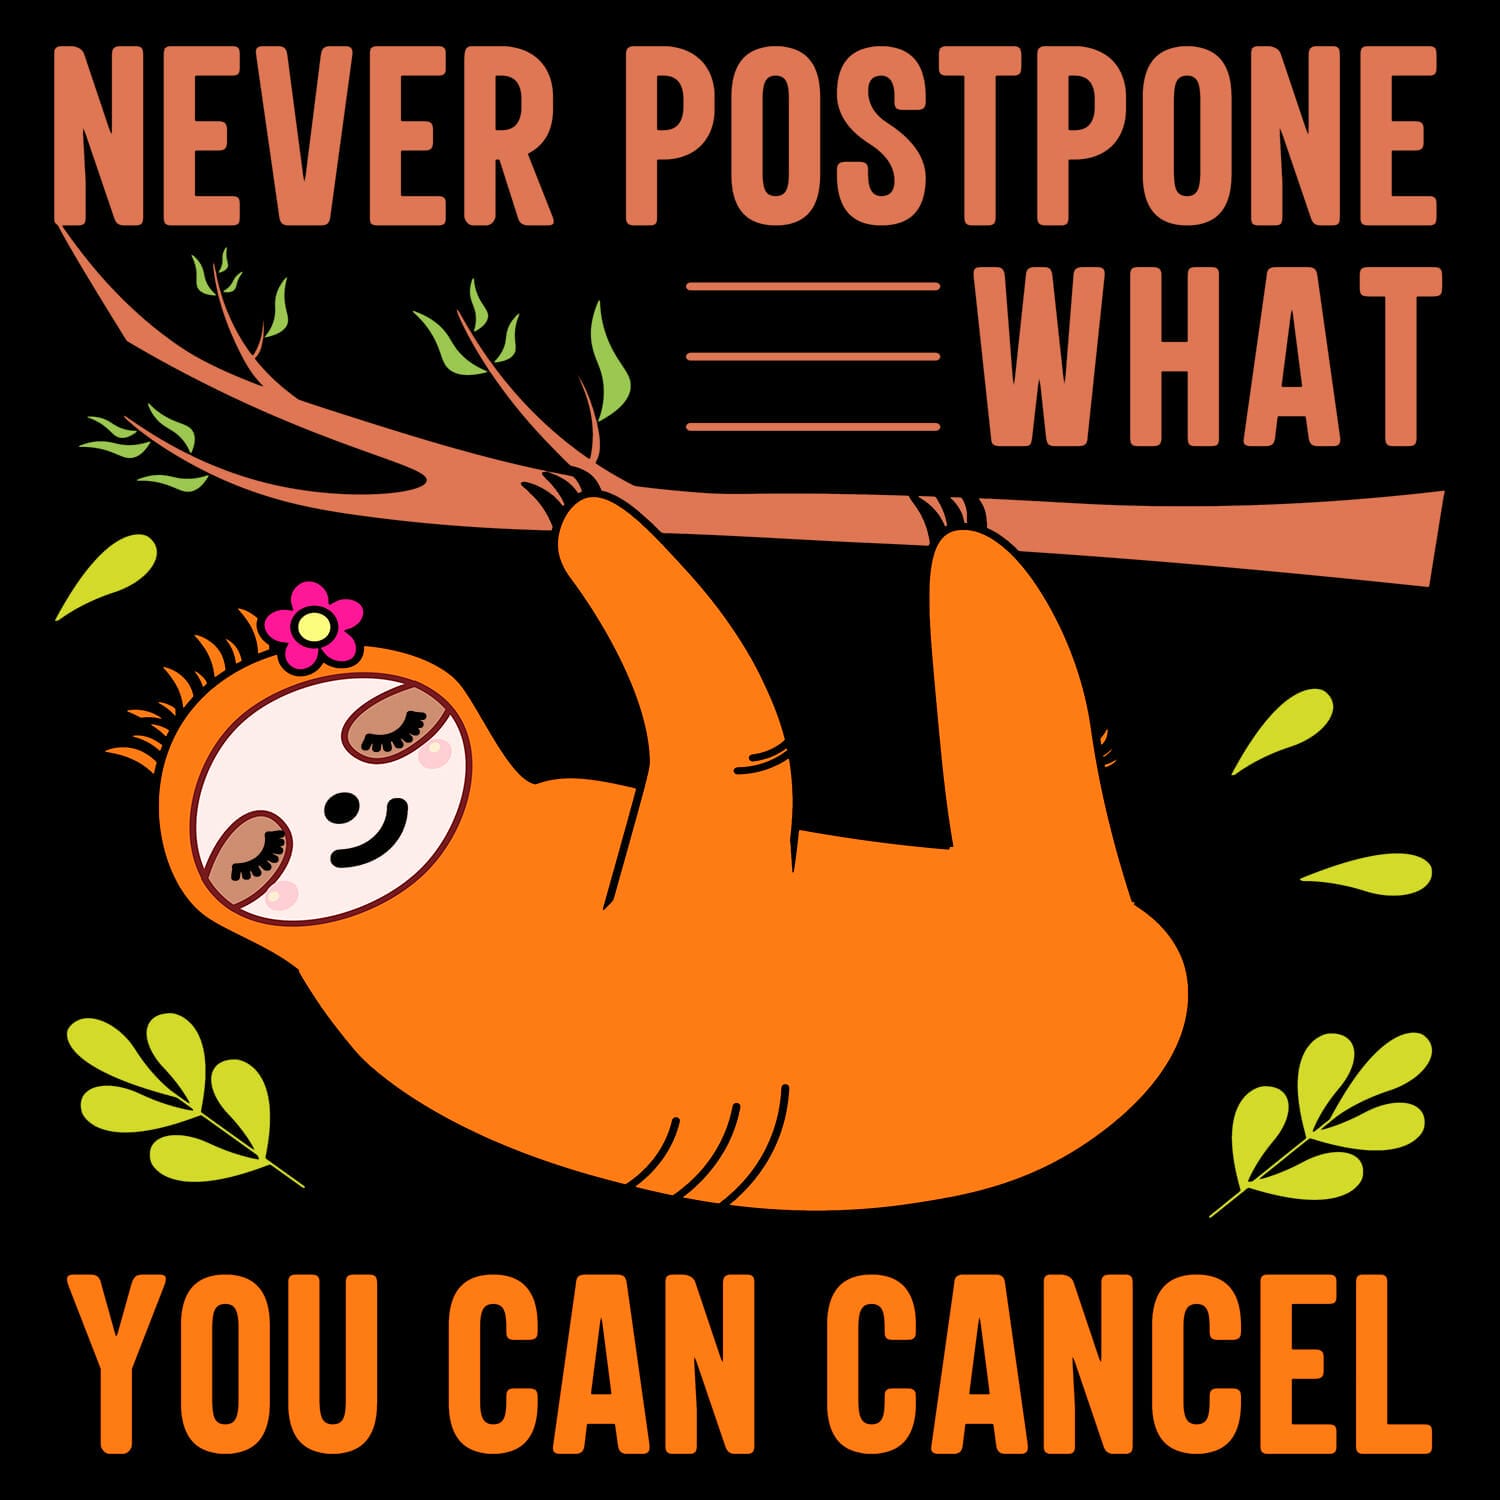 never postpone what you cancel - funny sloth tshirt design